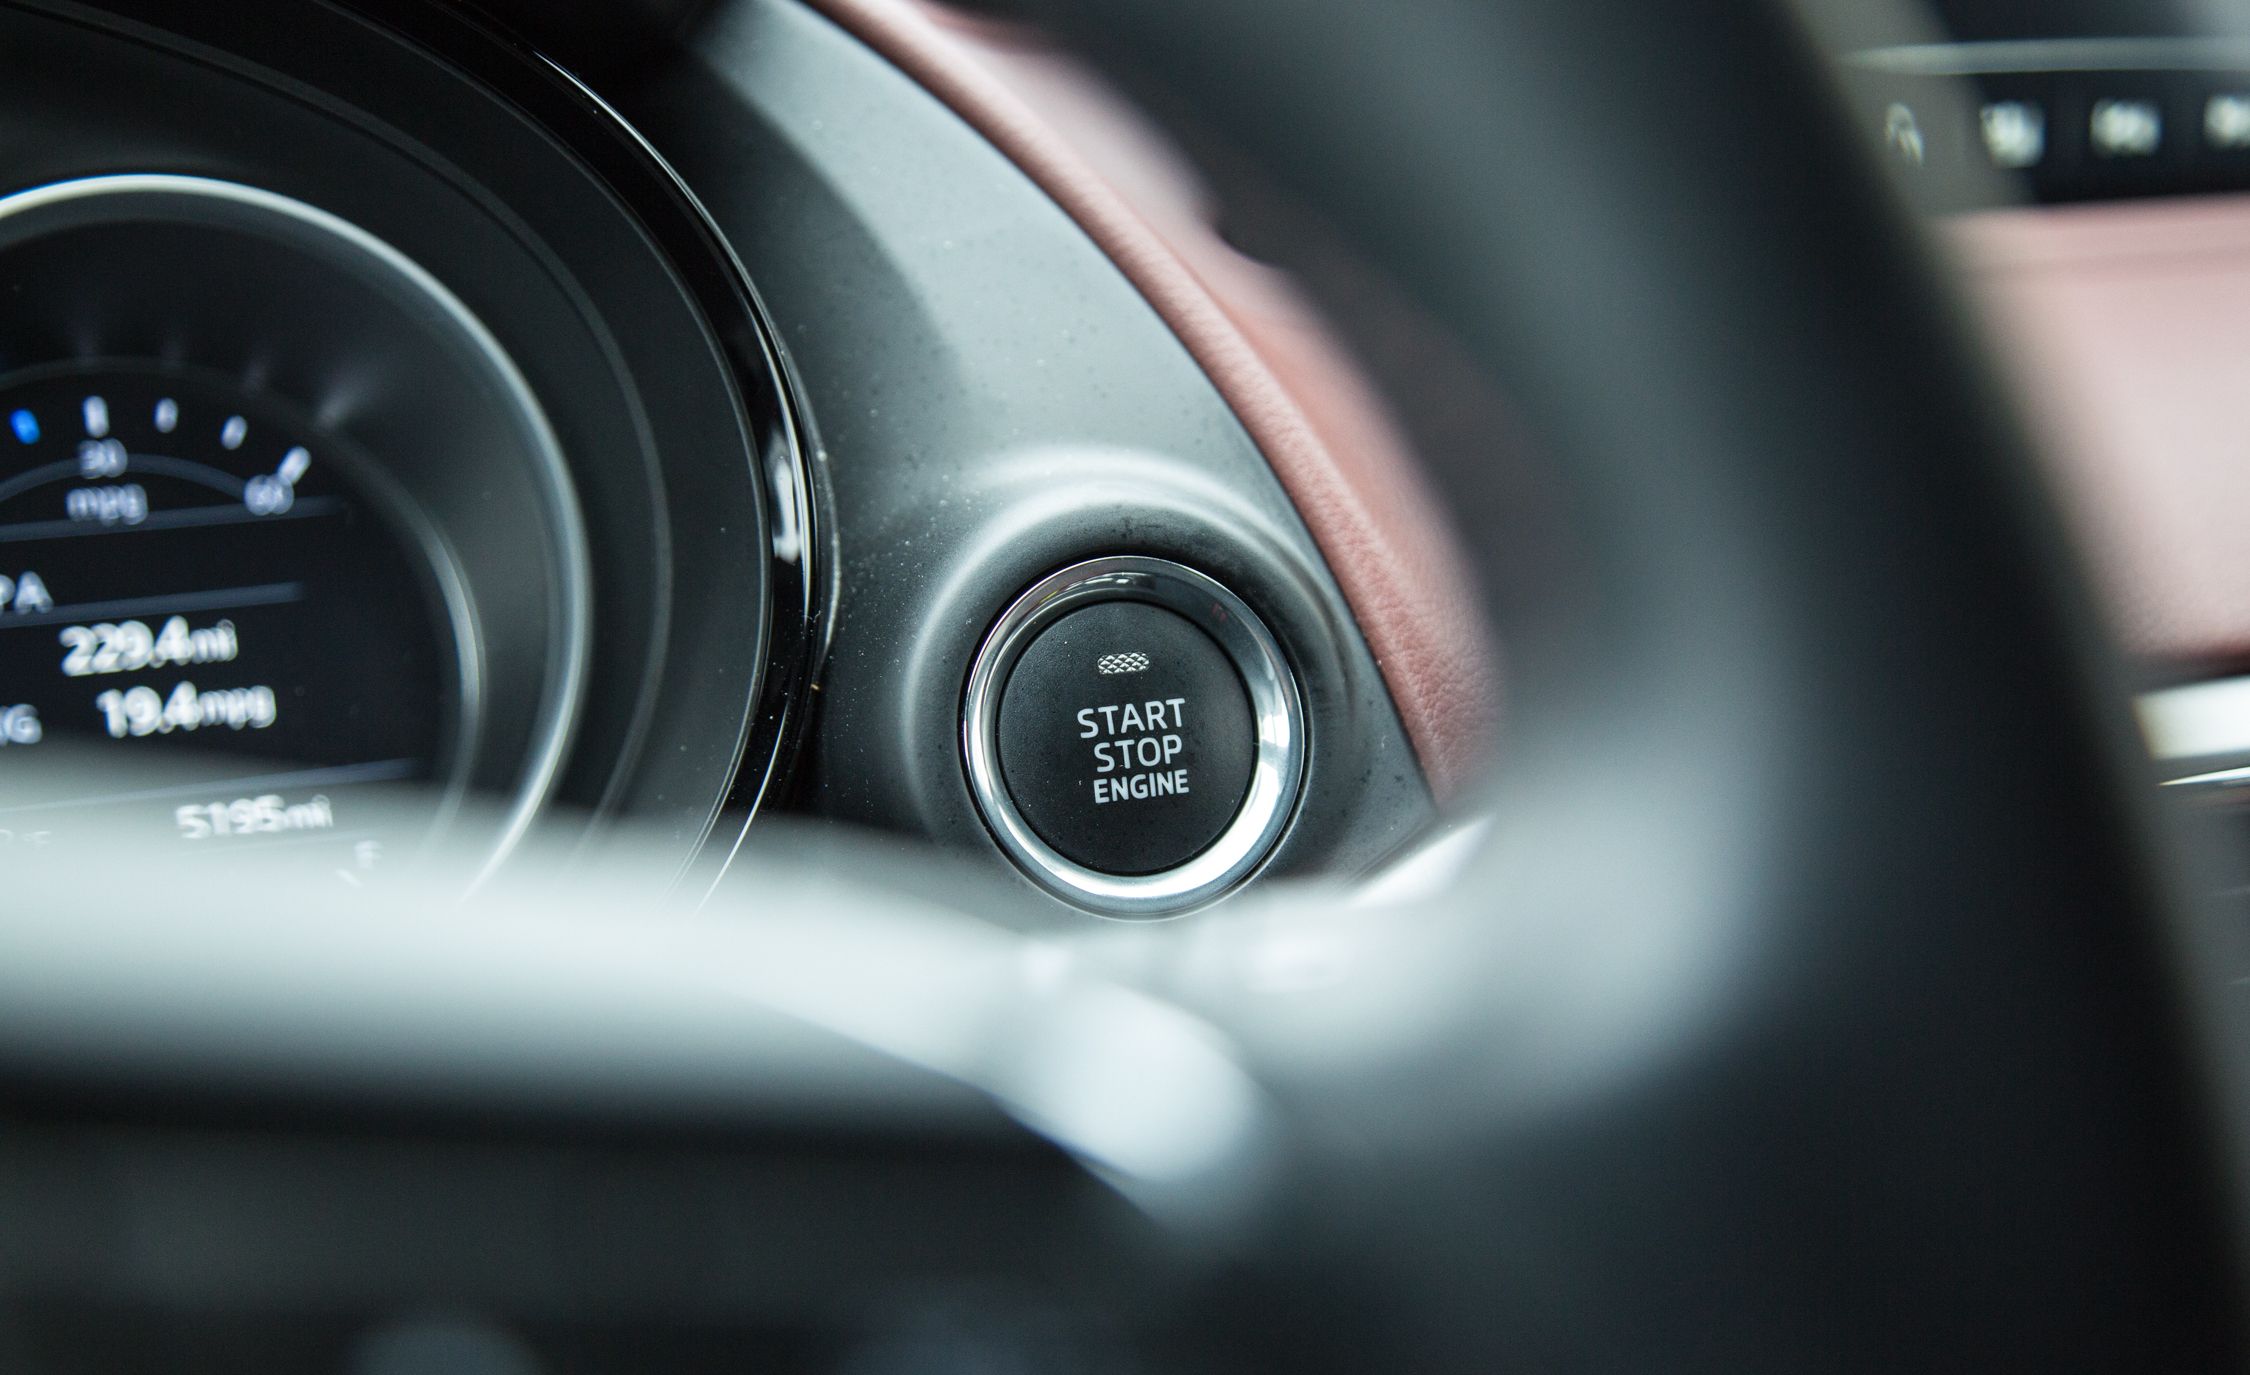 2017 Mazda CX 9 Interior View Start Stop Engine Button (View 9 of 28)